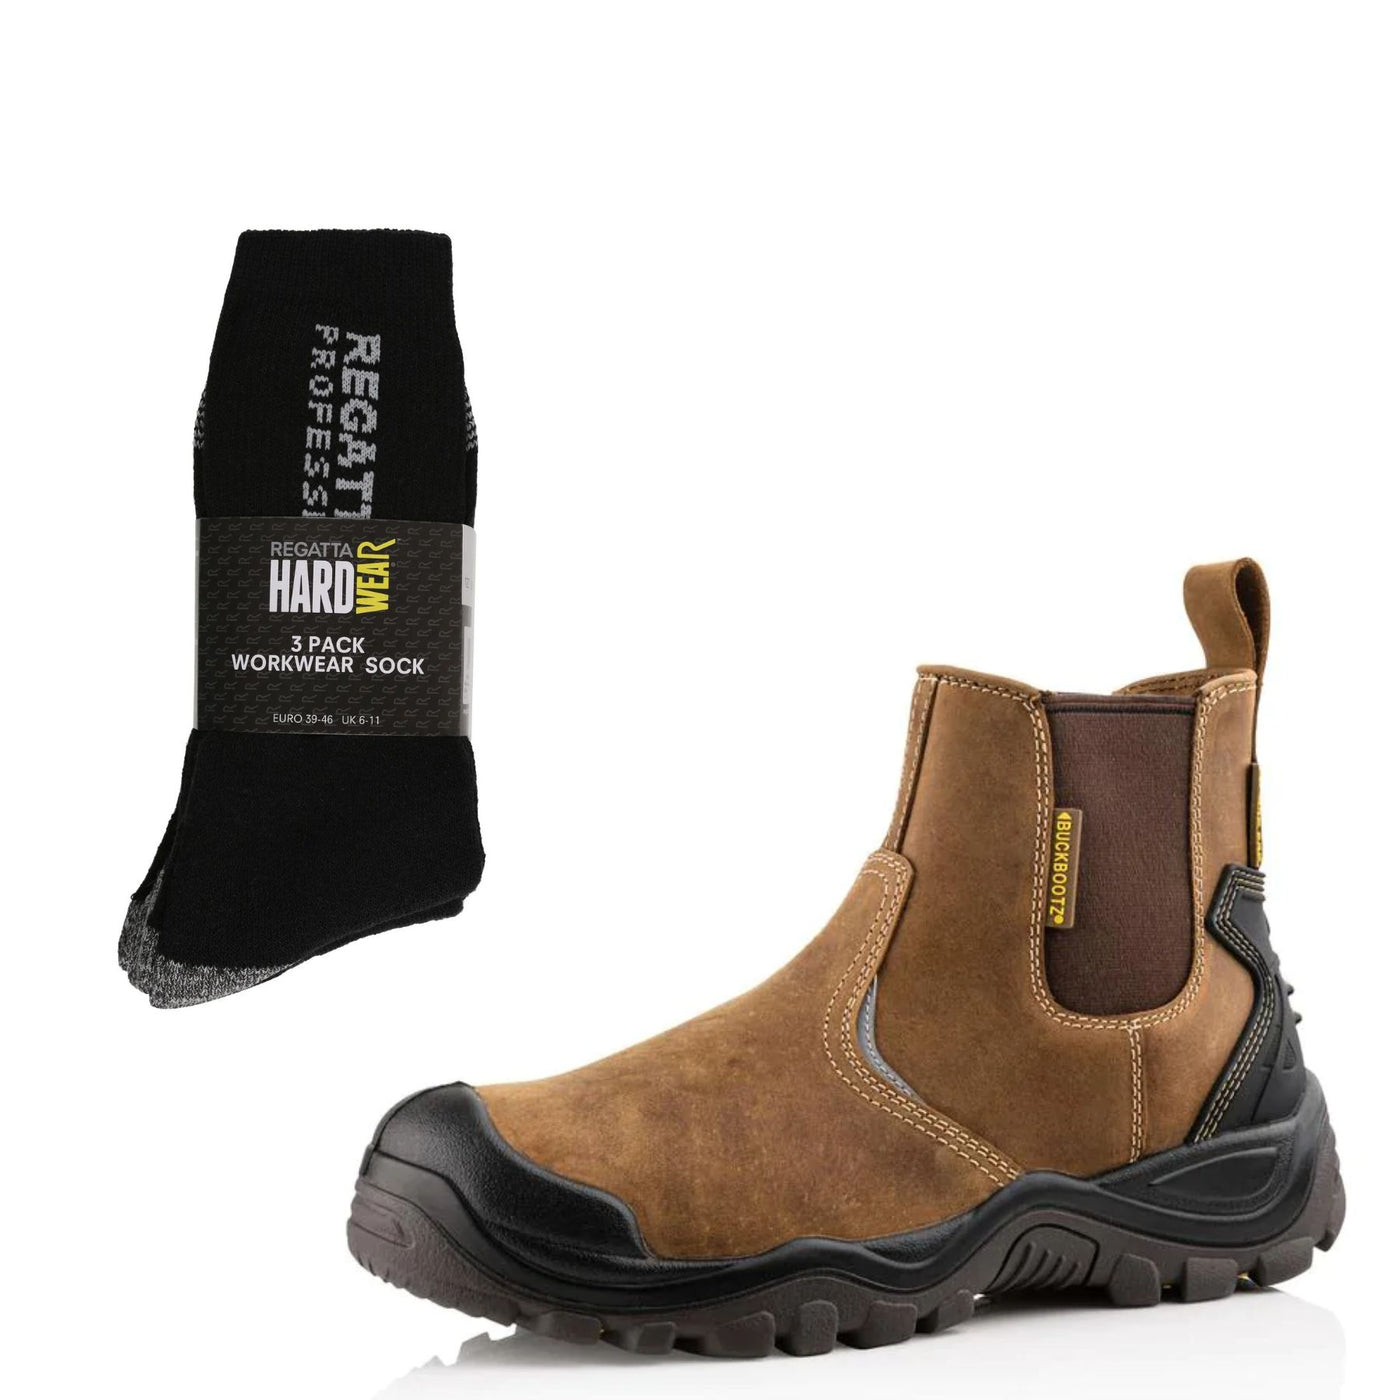 Buckbootz BSH006 Special Offer Pack - Buckler Buckshot Safety Dealer Boots + 3 Pairs Work Socks